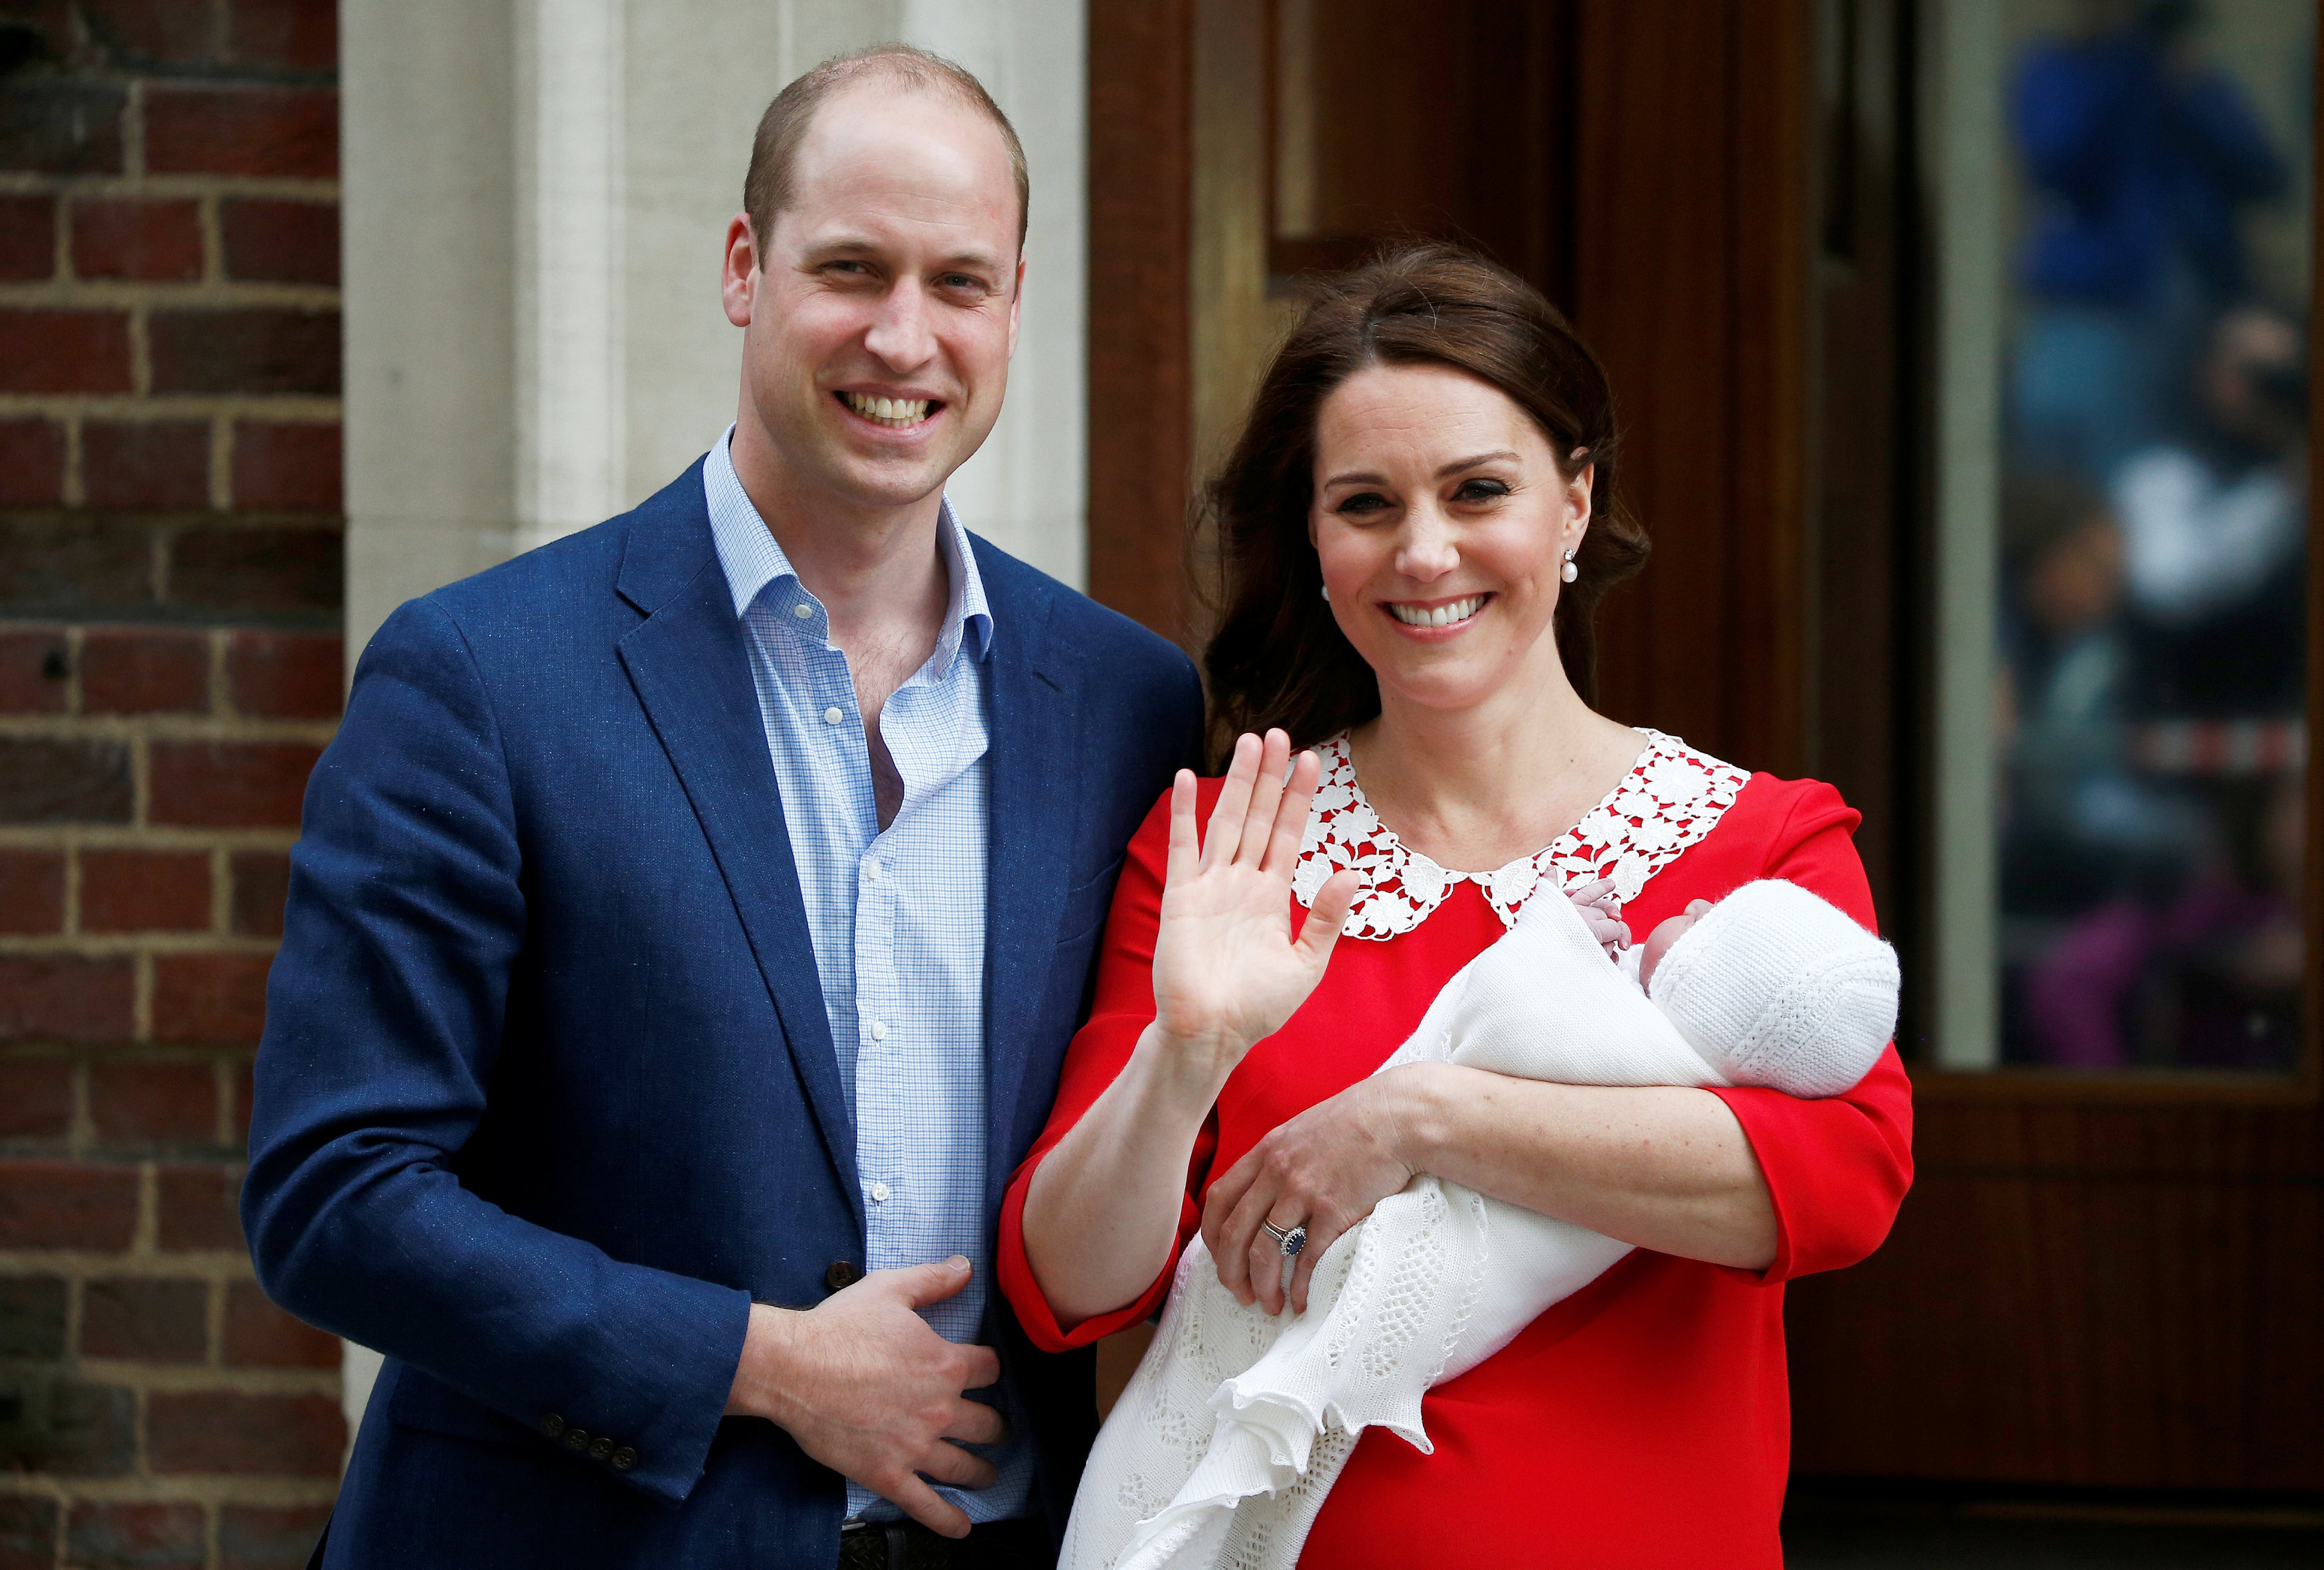 El alta exprés de Kate Middleton tras dar a luz aviva la polémica